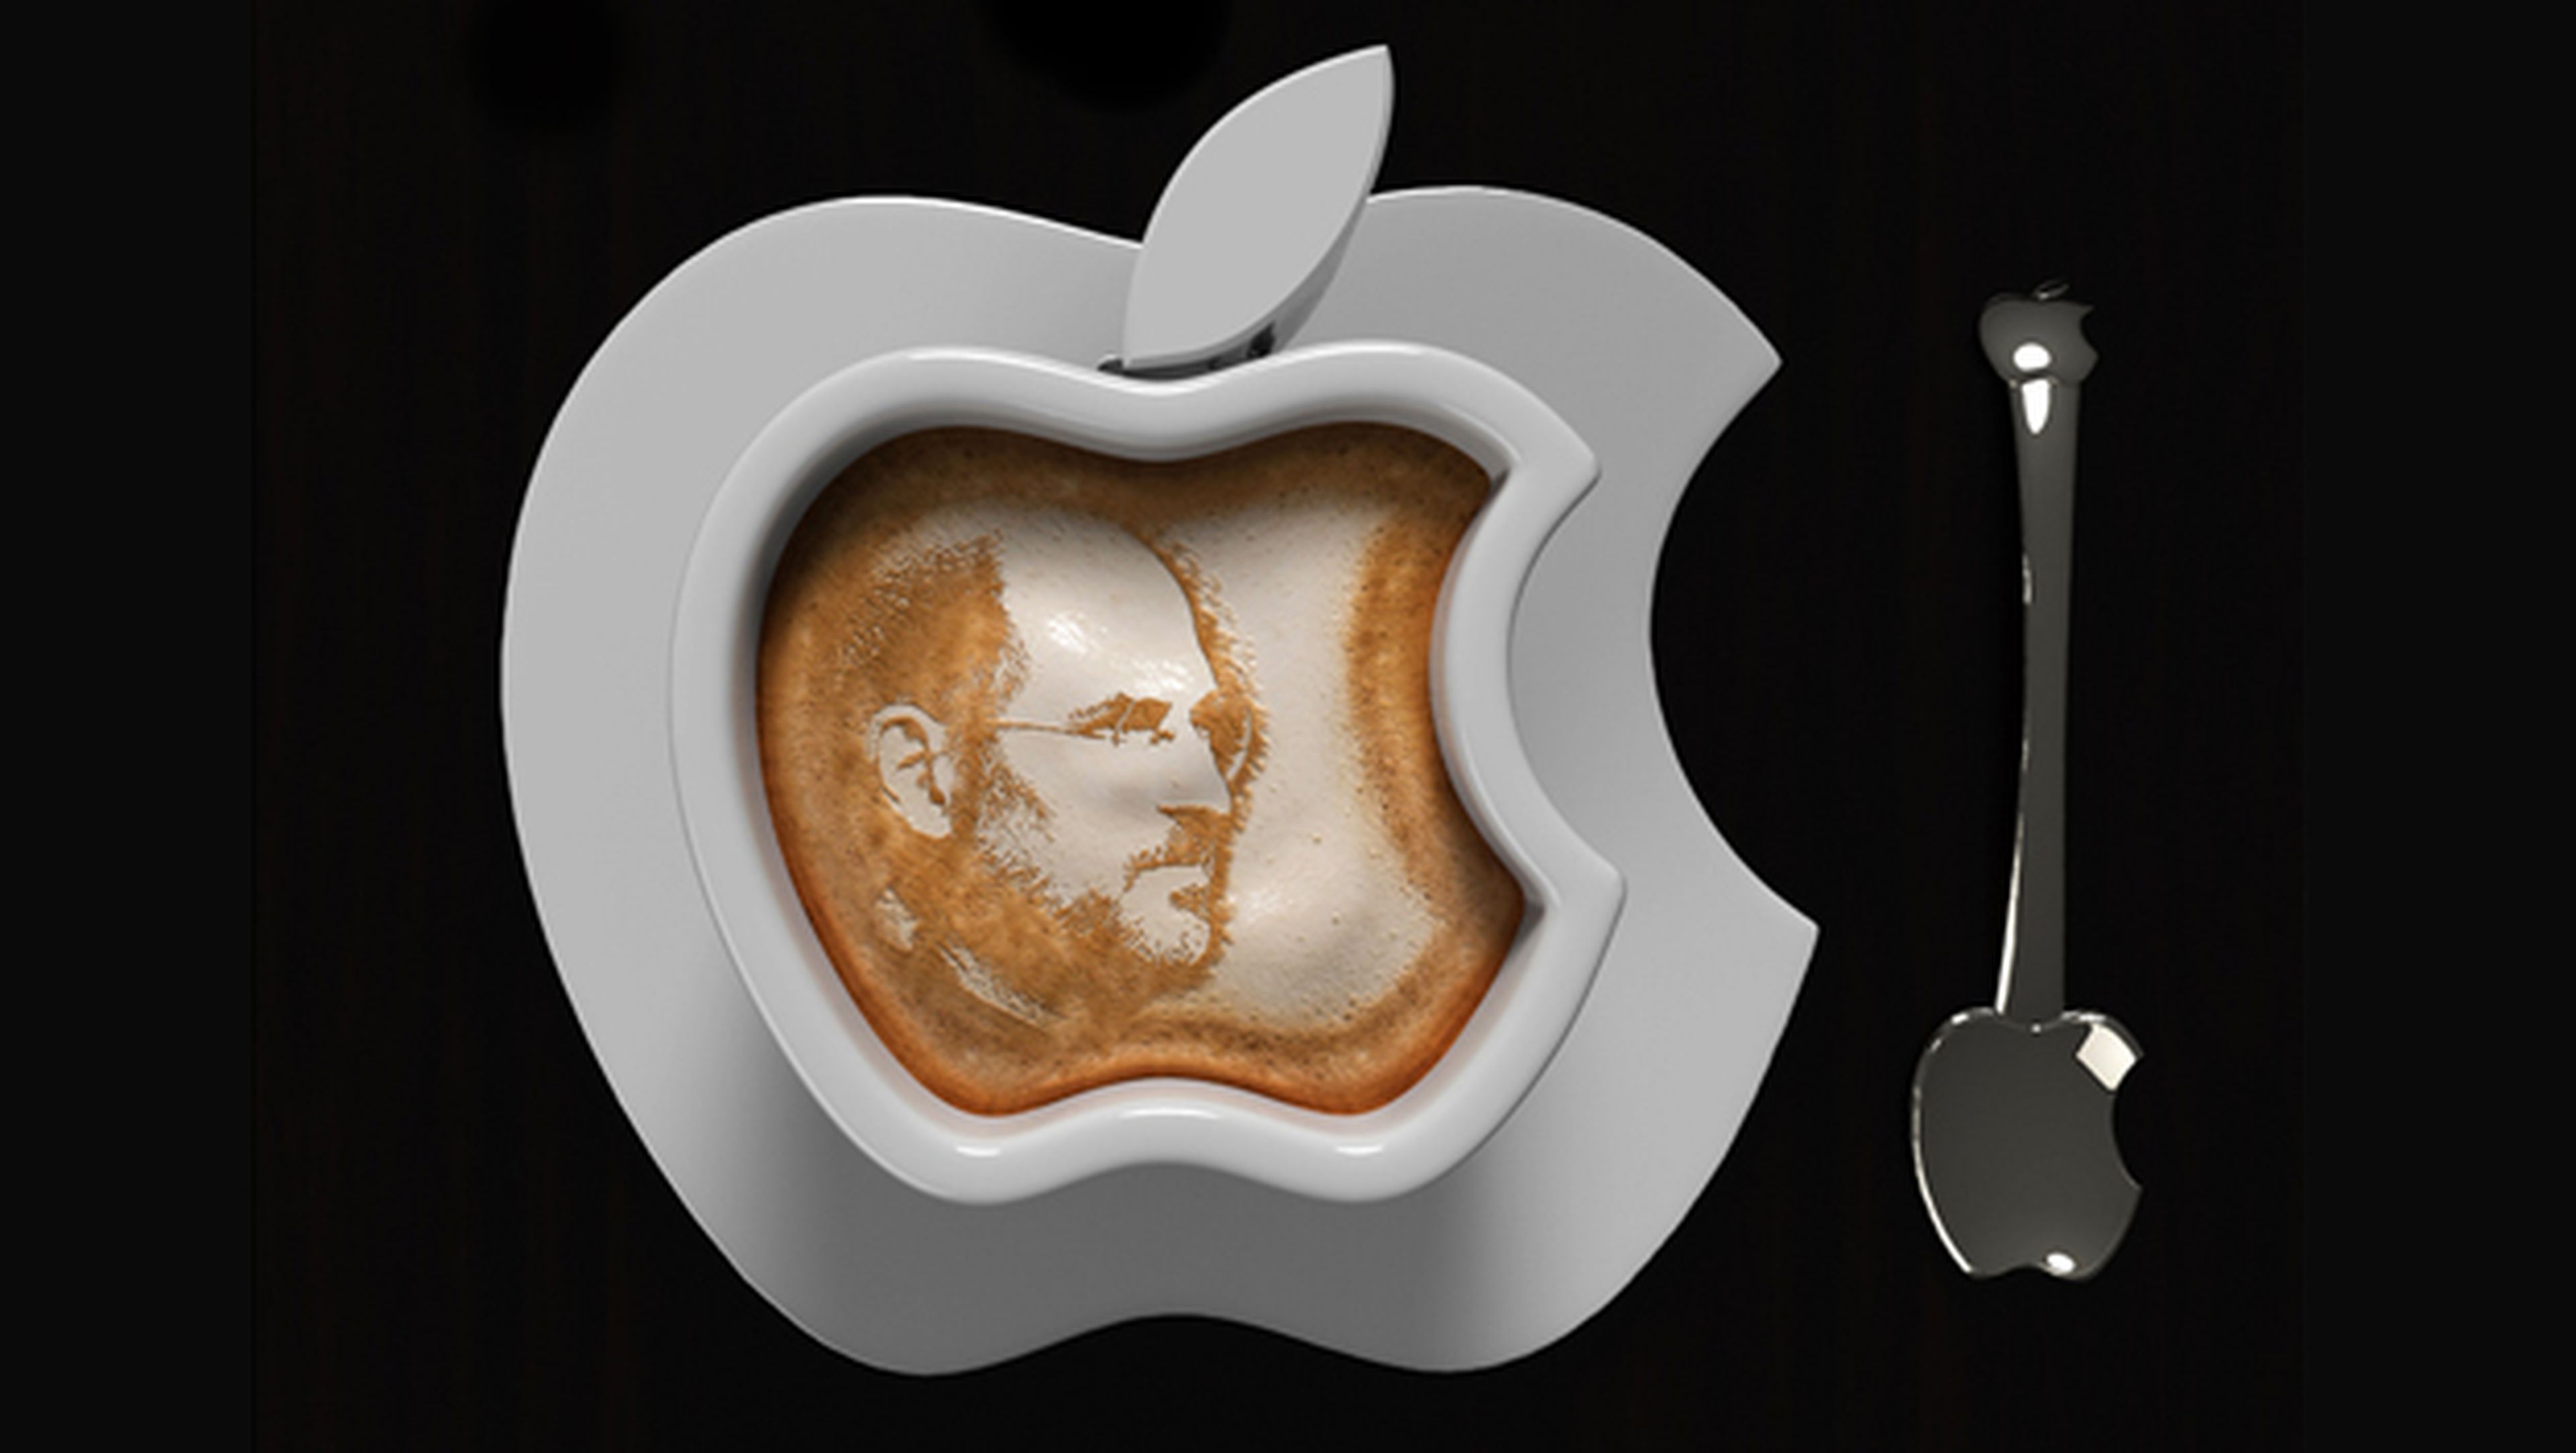 ¿Sabes servir cafés? Podrías ser "iCup Technician" en Apple